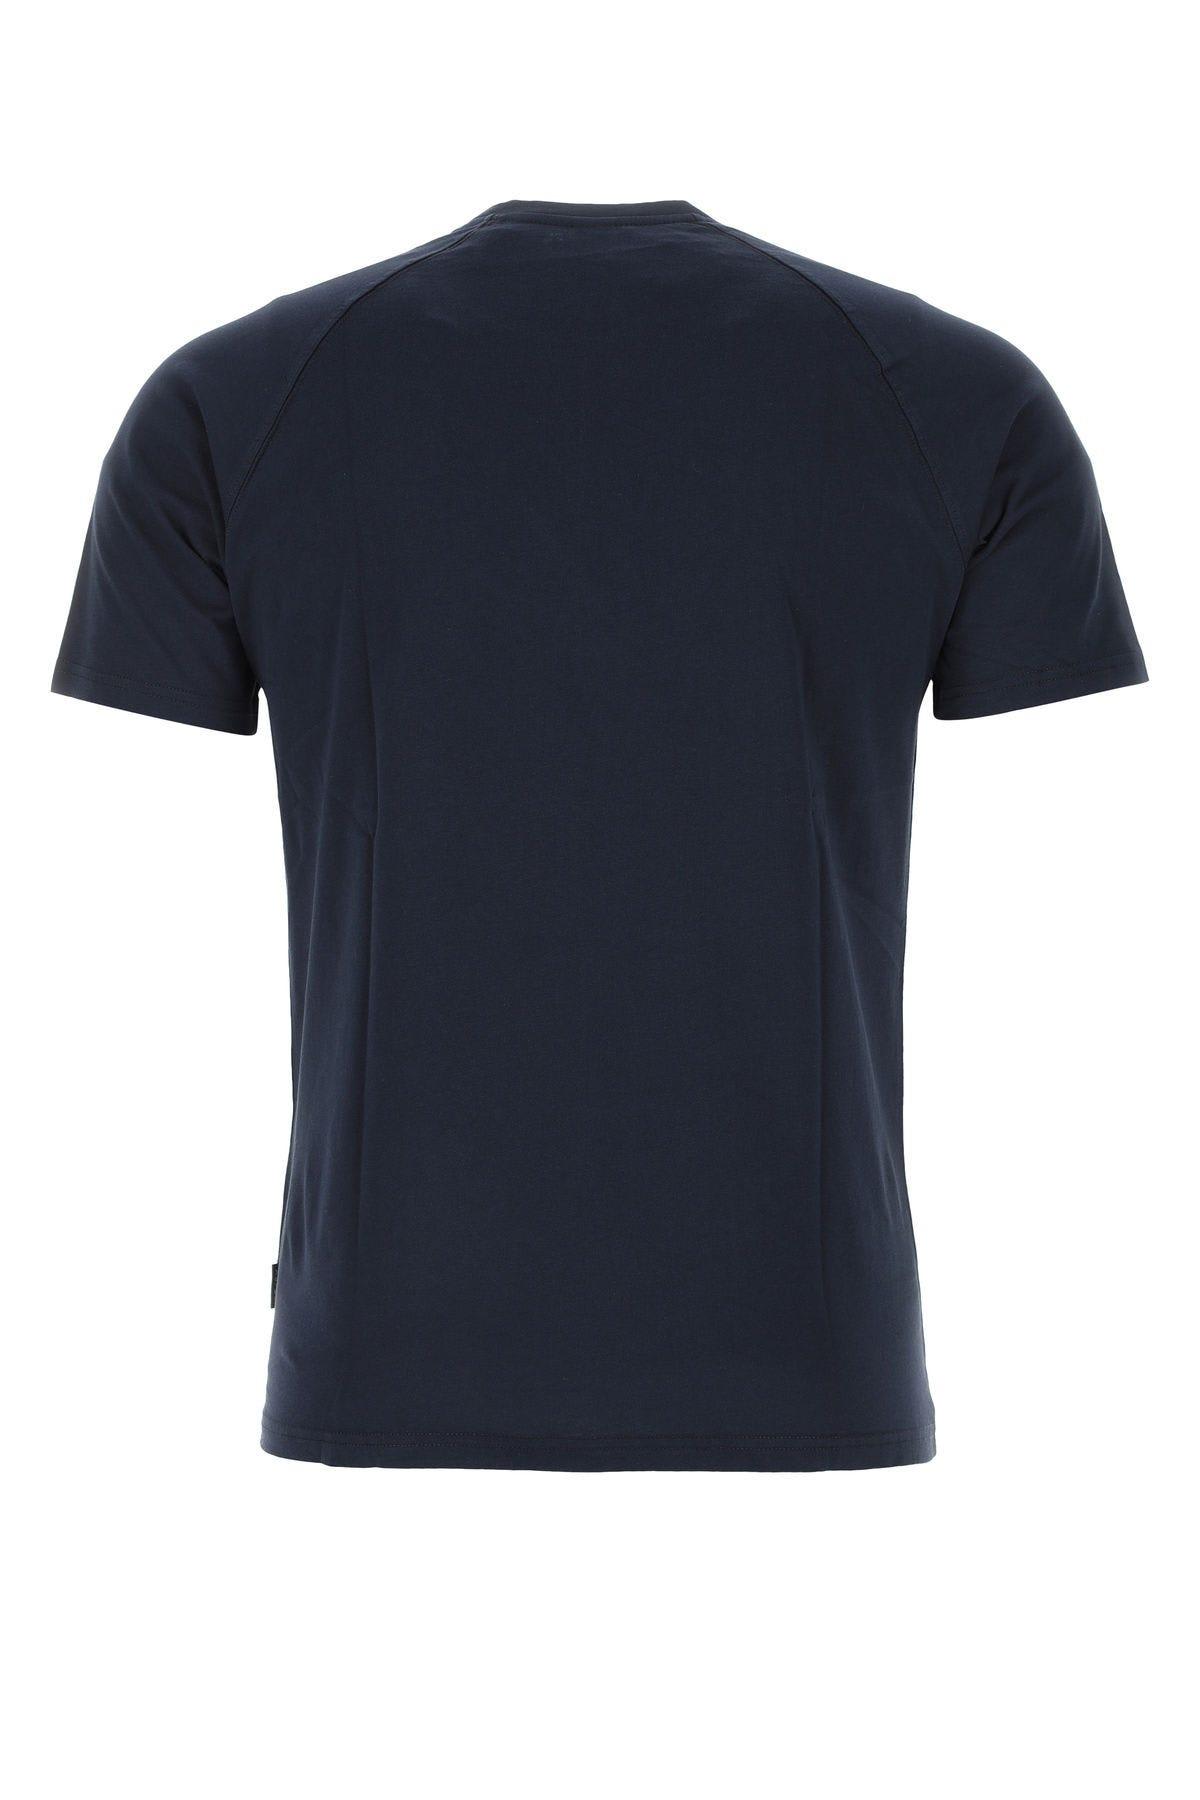 Shop Aspesi Navy Blue Cotton T-shirt